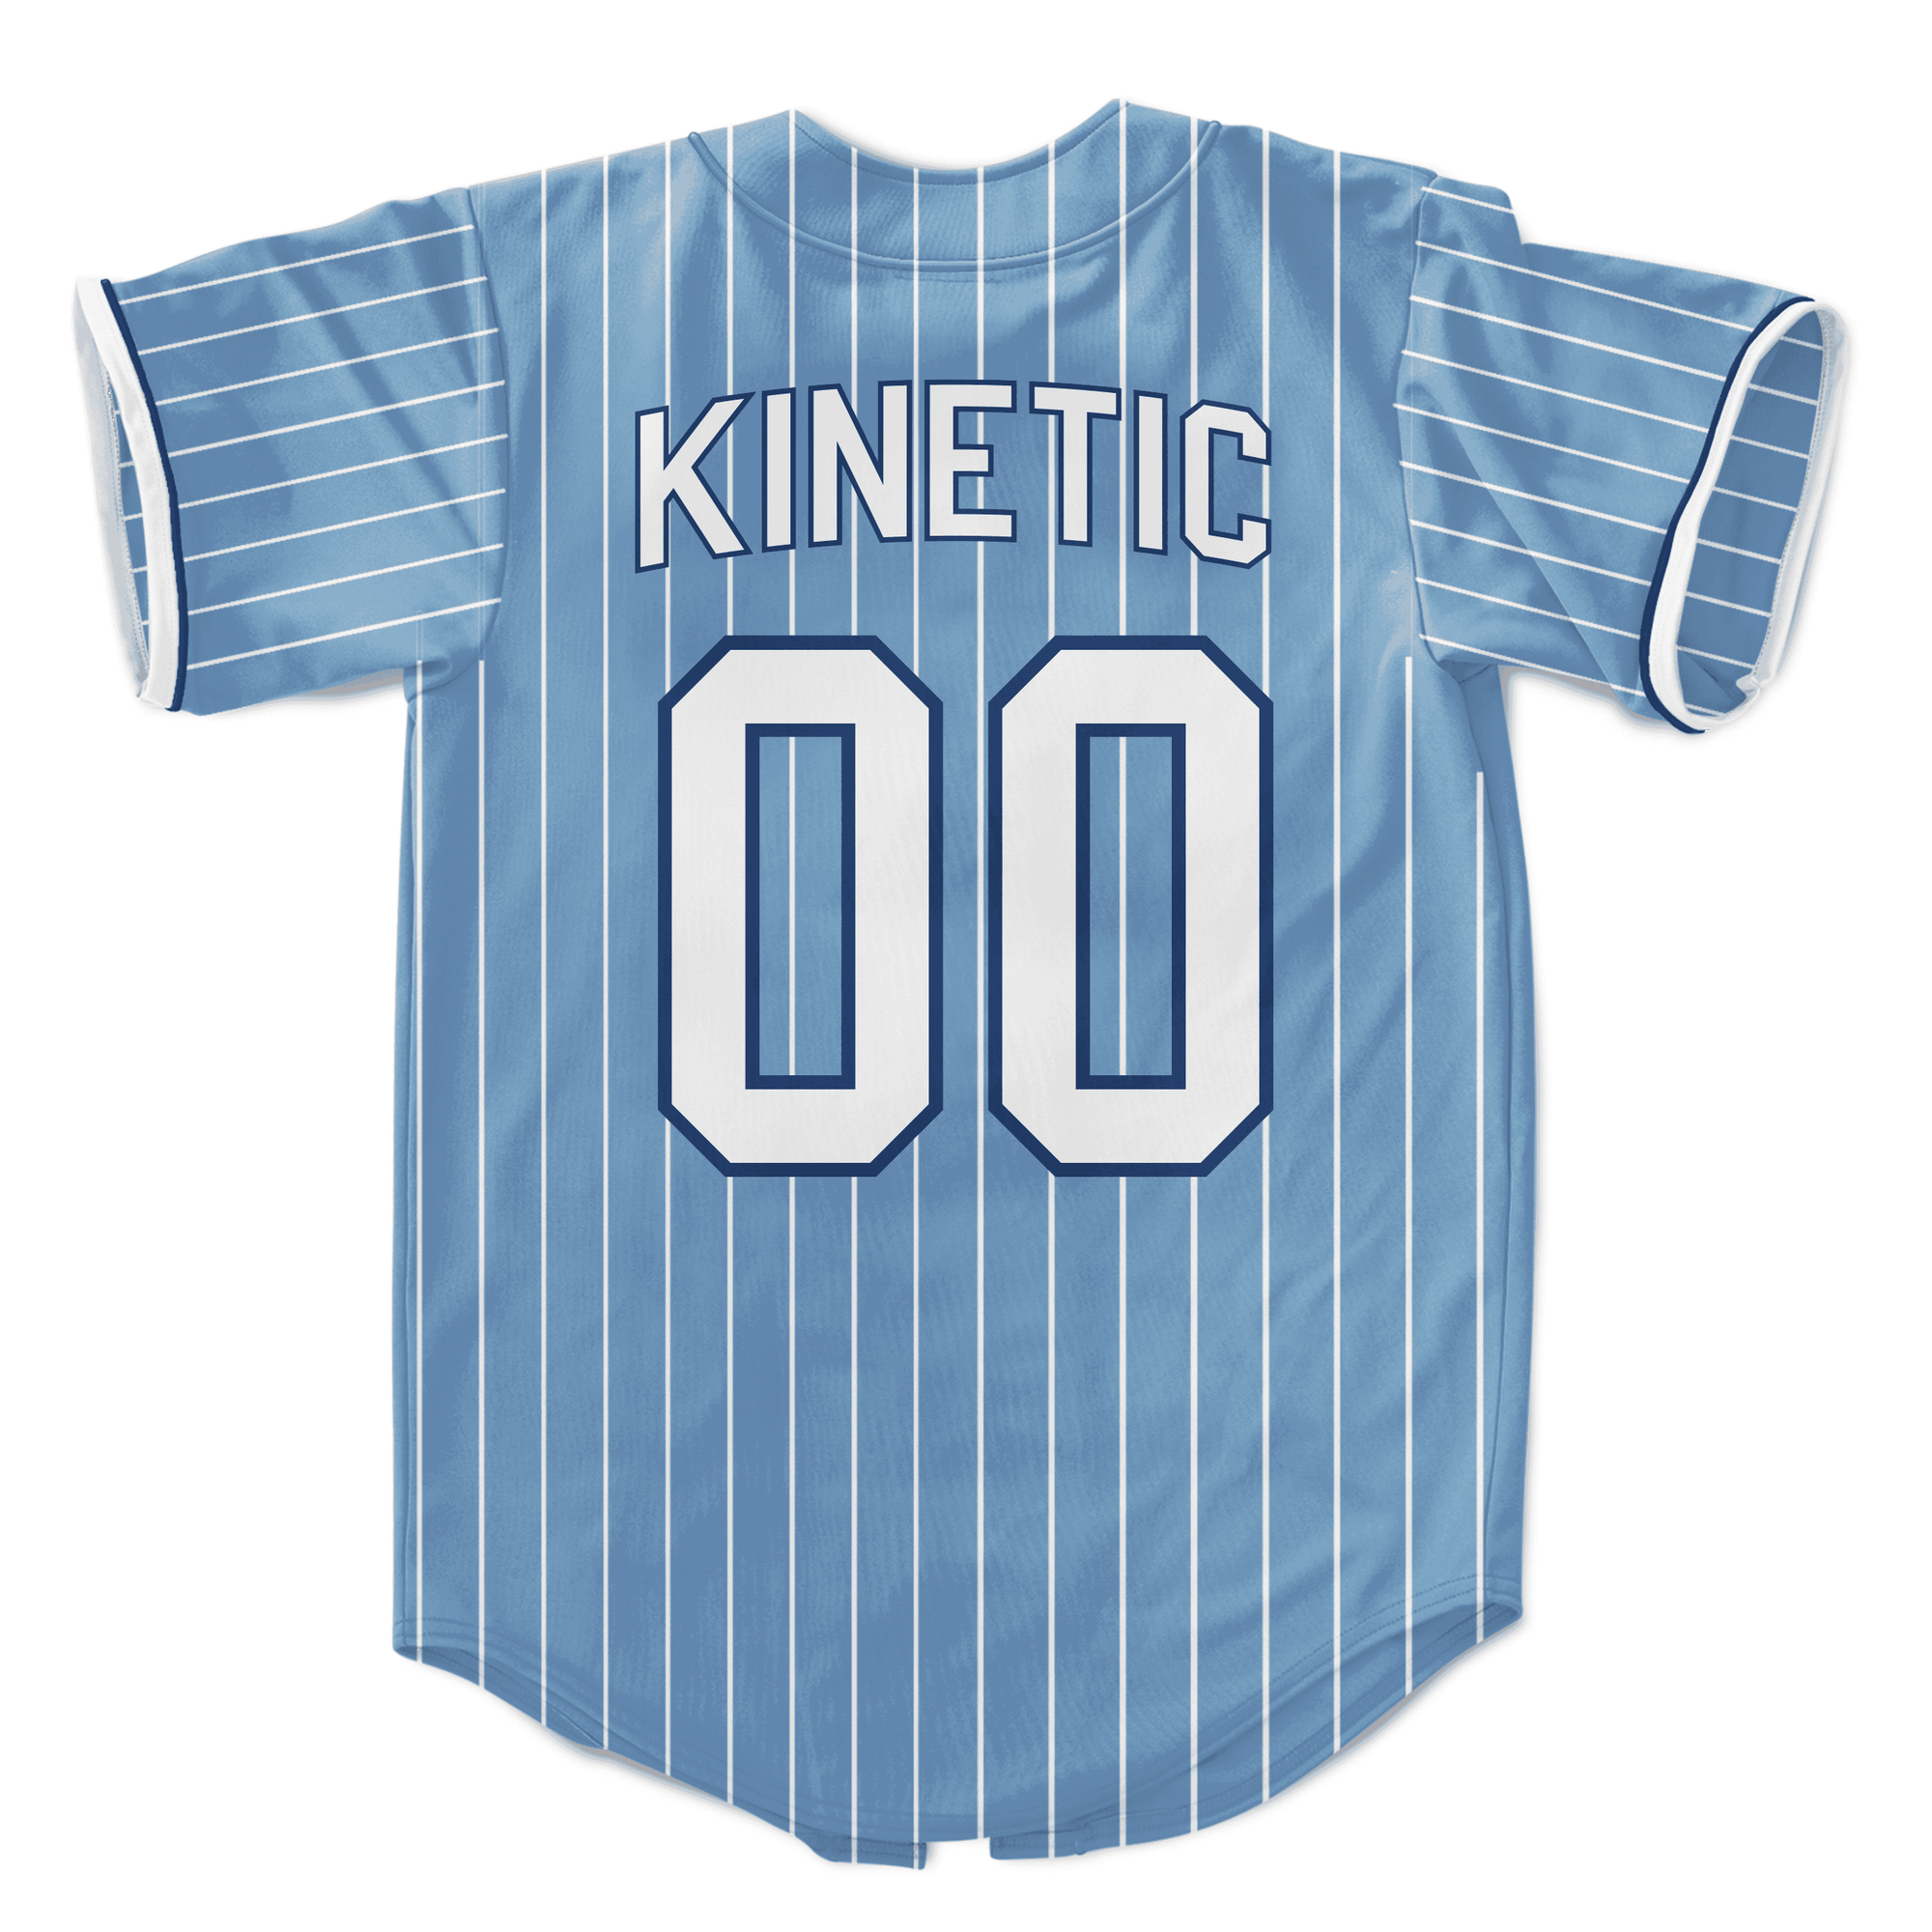 Phi Kappa Psi - Blue Shade Baseball Jersey